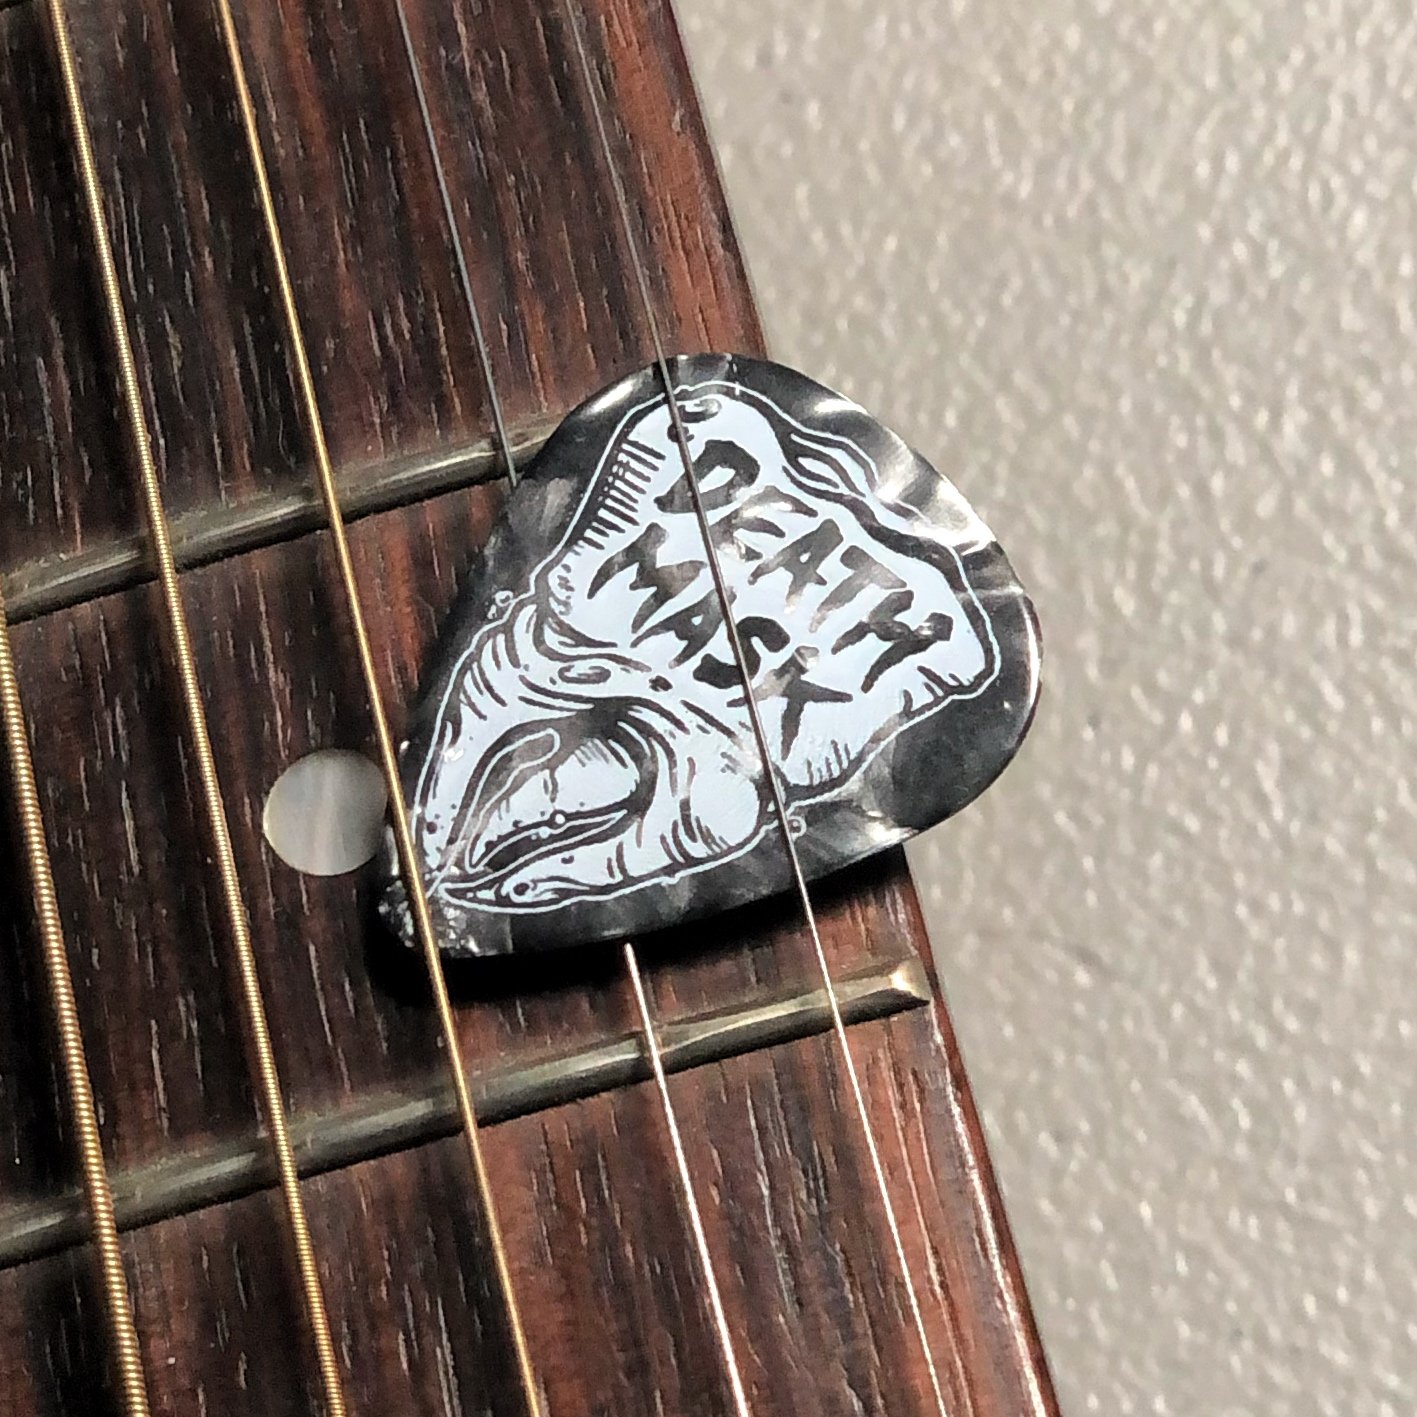 Guitar Mask